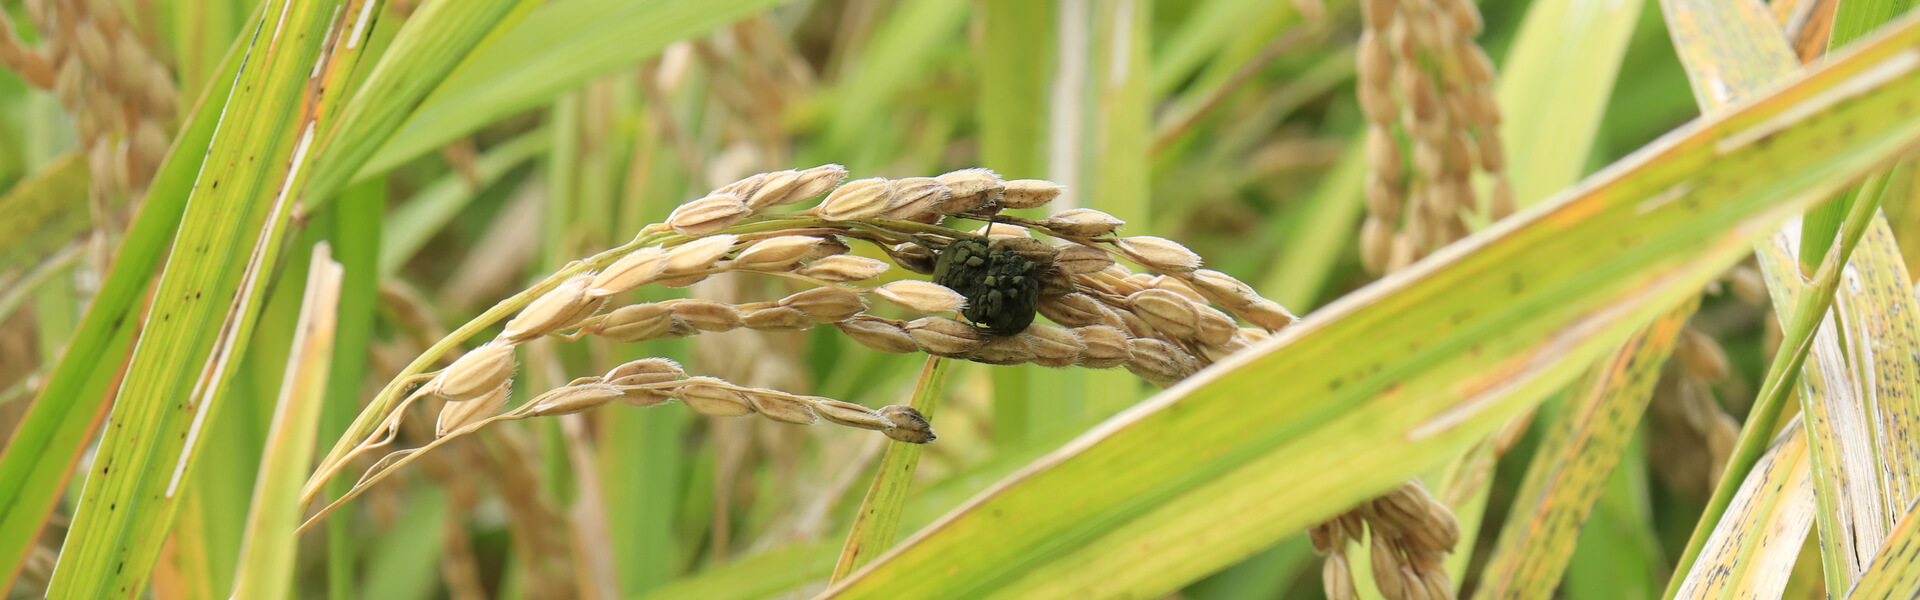 ложная головня на посевах риса